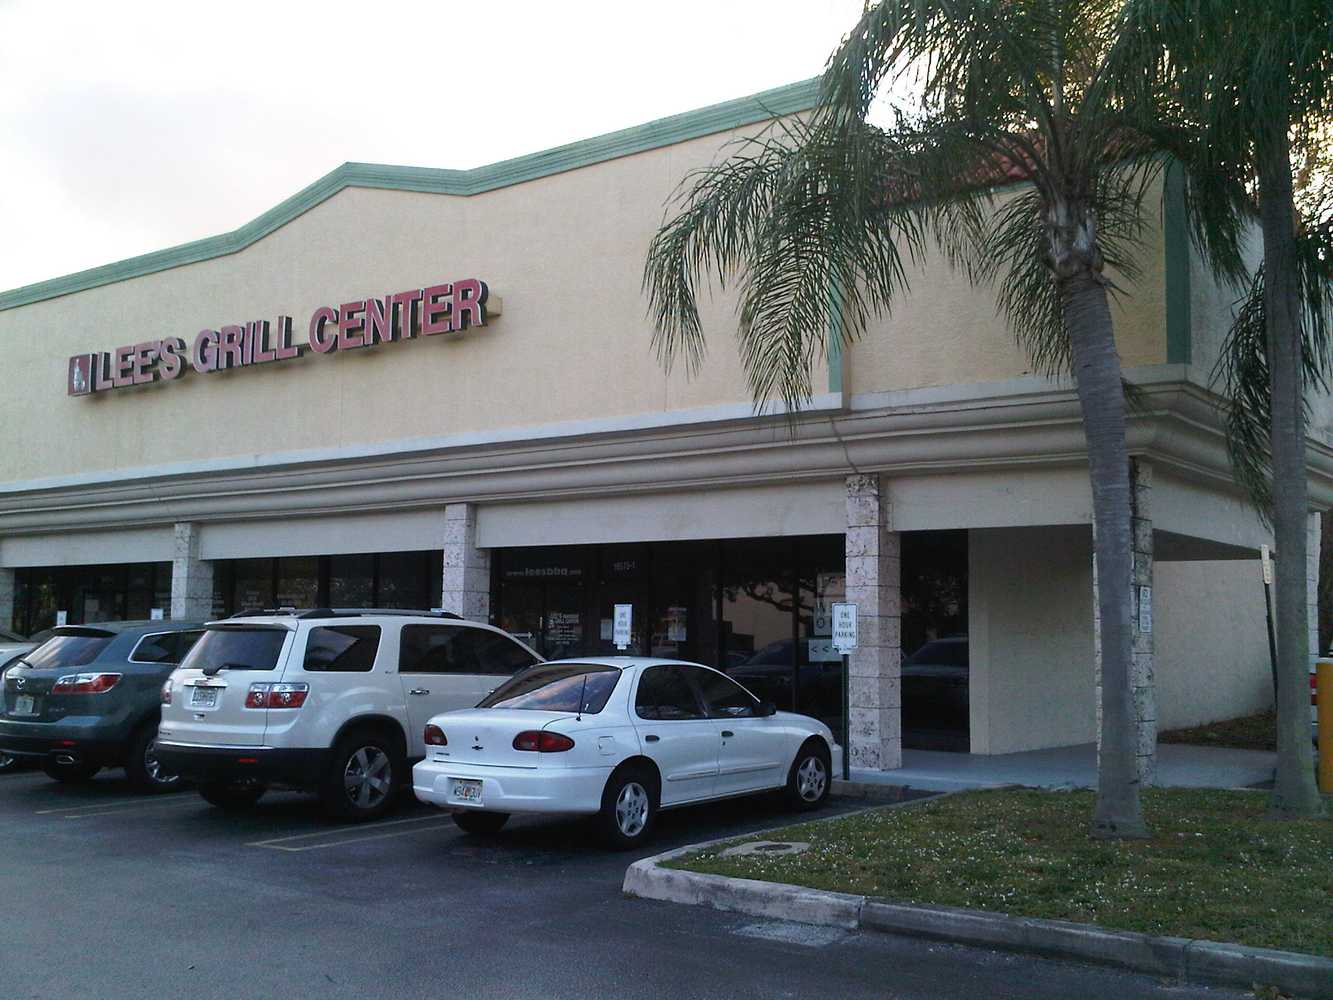 2012 Enterprise Rental Car in Boca Raton, FL